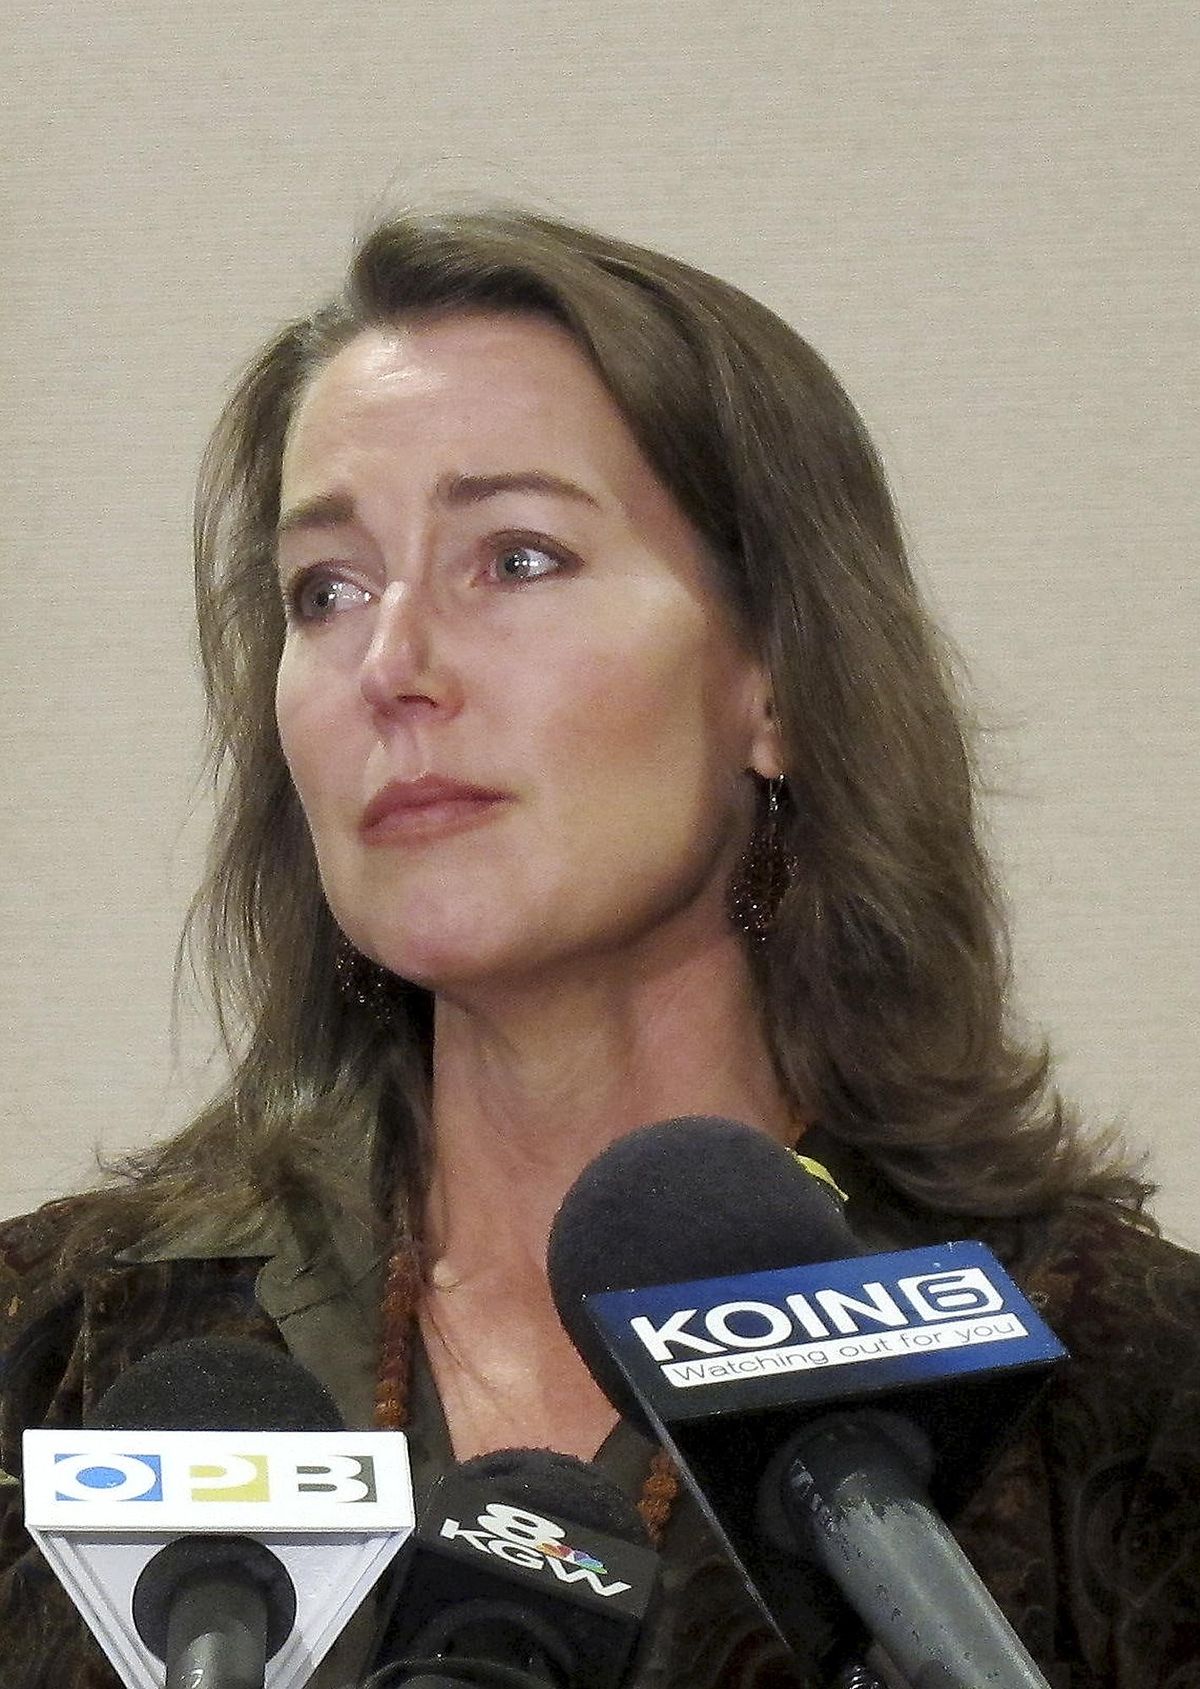 Cylvia Hayes, fiancee of Oregon Gov. John Kitzhaber, speaks at a news conference in Portland, Ore. on Thursday, Oct. 9, 2014. (Gosia Wozniacka / AP)